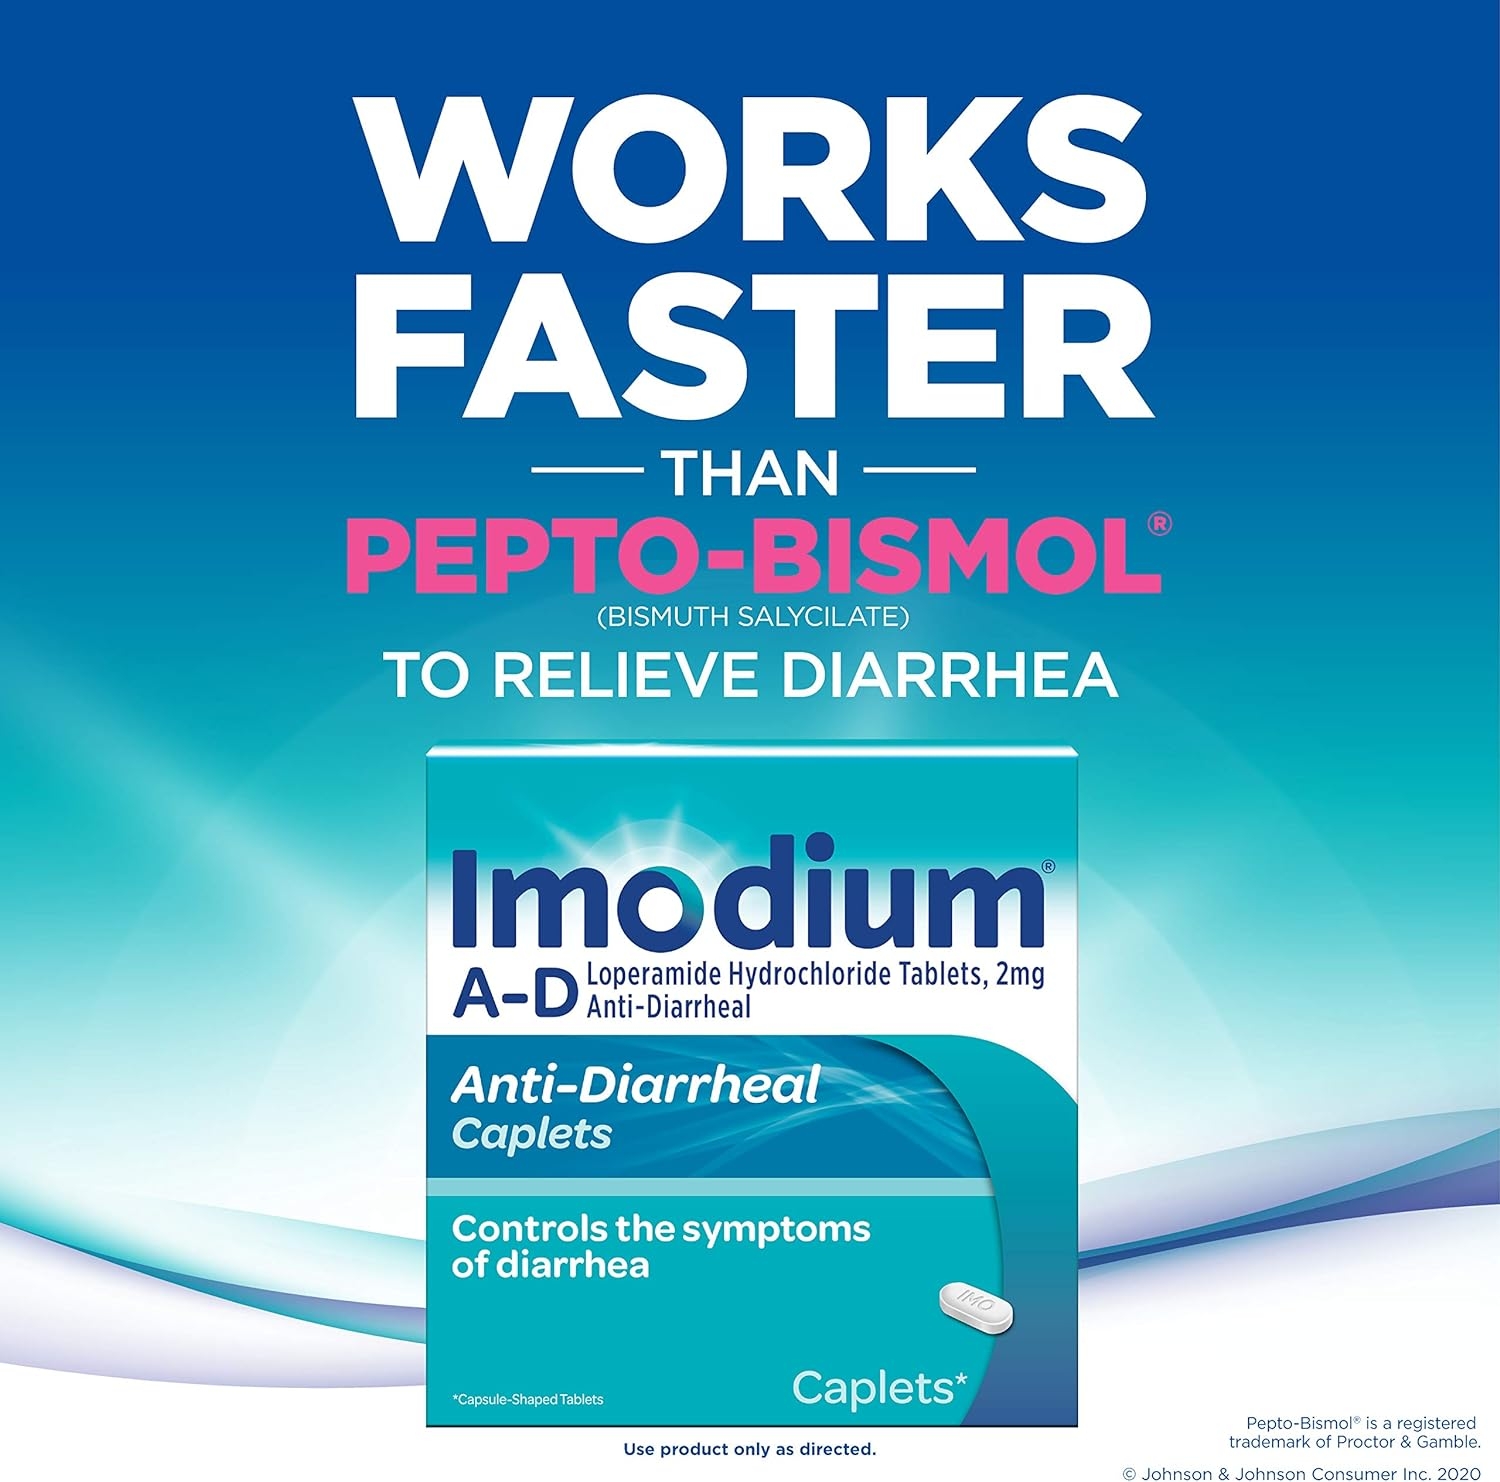 Imodium A-D Diarrhea Relief Caplets with Loperamide Hydrochloride, 12 ct.